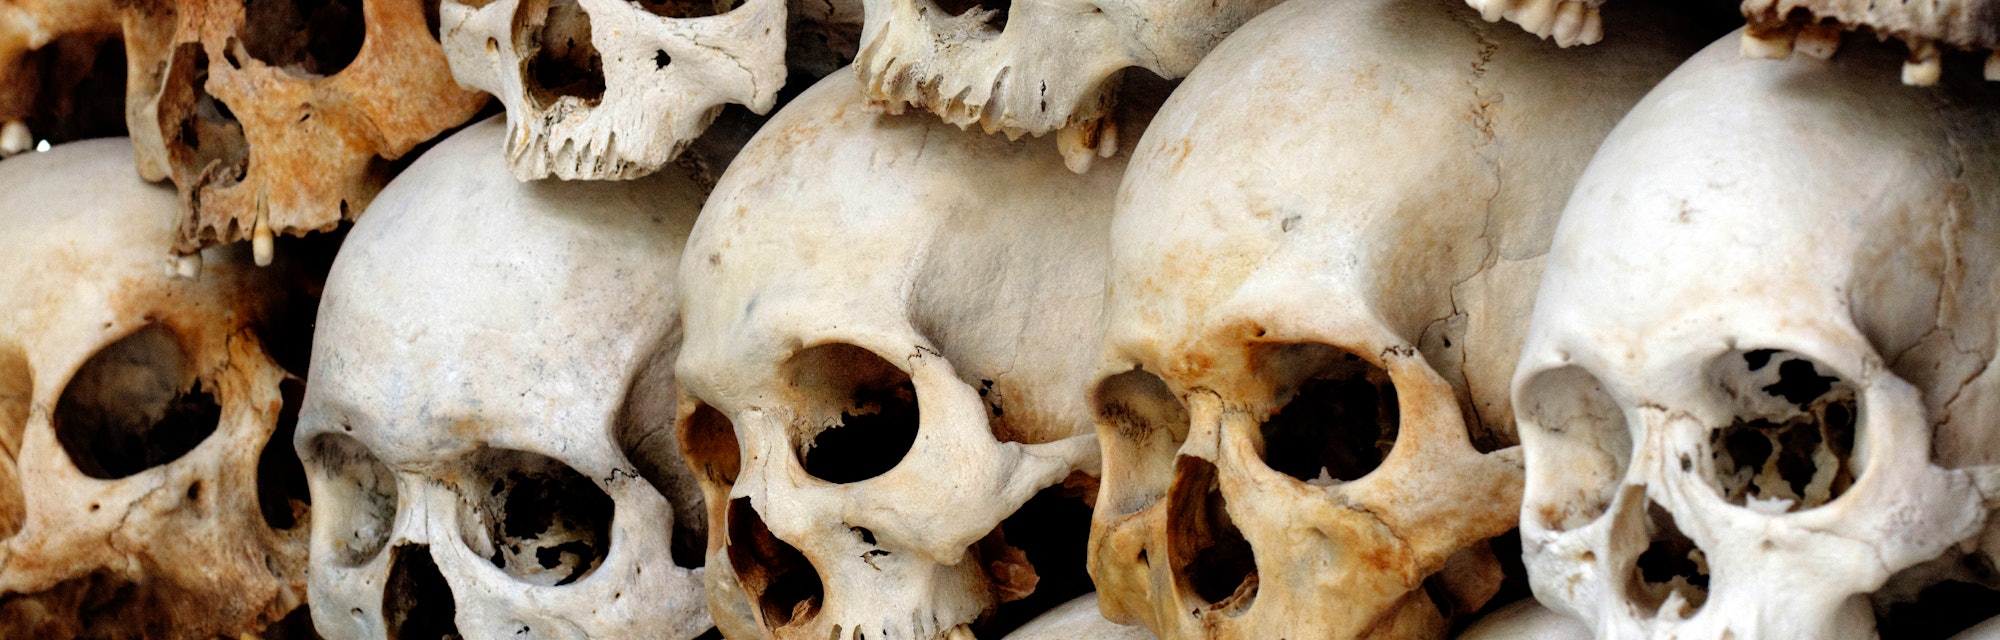 The Killing Fields, Human Skulls at Choeung Ek Genocide Memorial, Cambodia. (Photo by: Bob Henry/UCG...